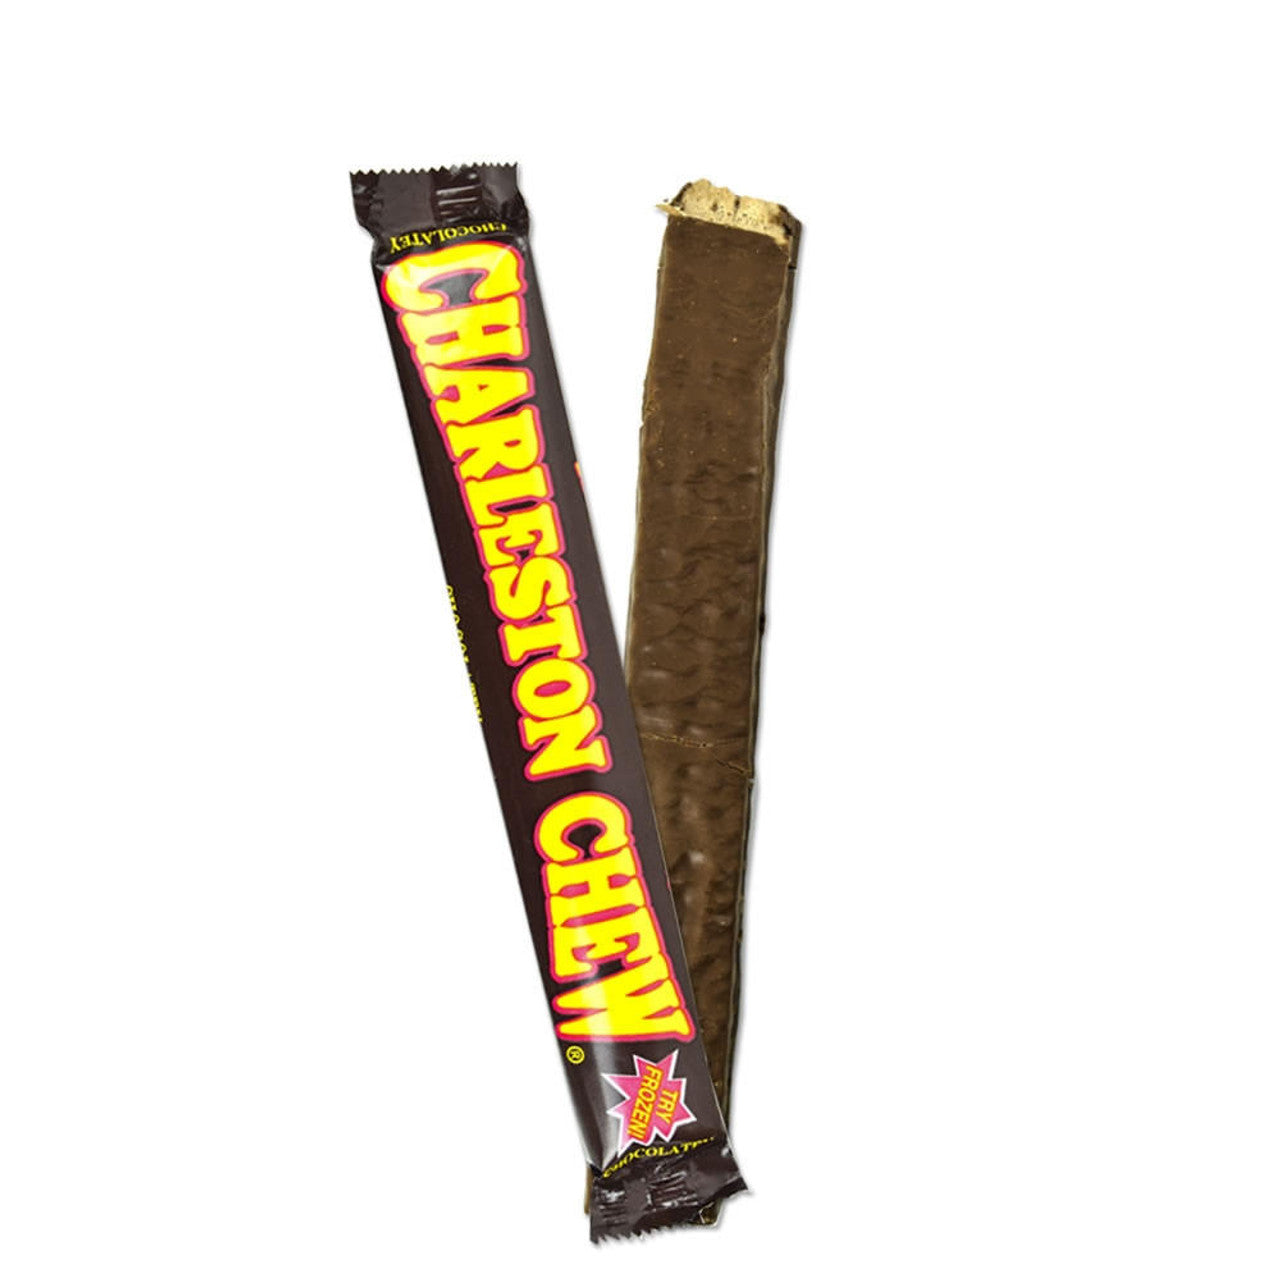 Charleston Chew Chocolate - 1.87 oz